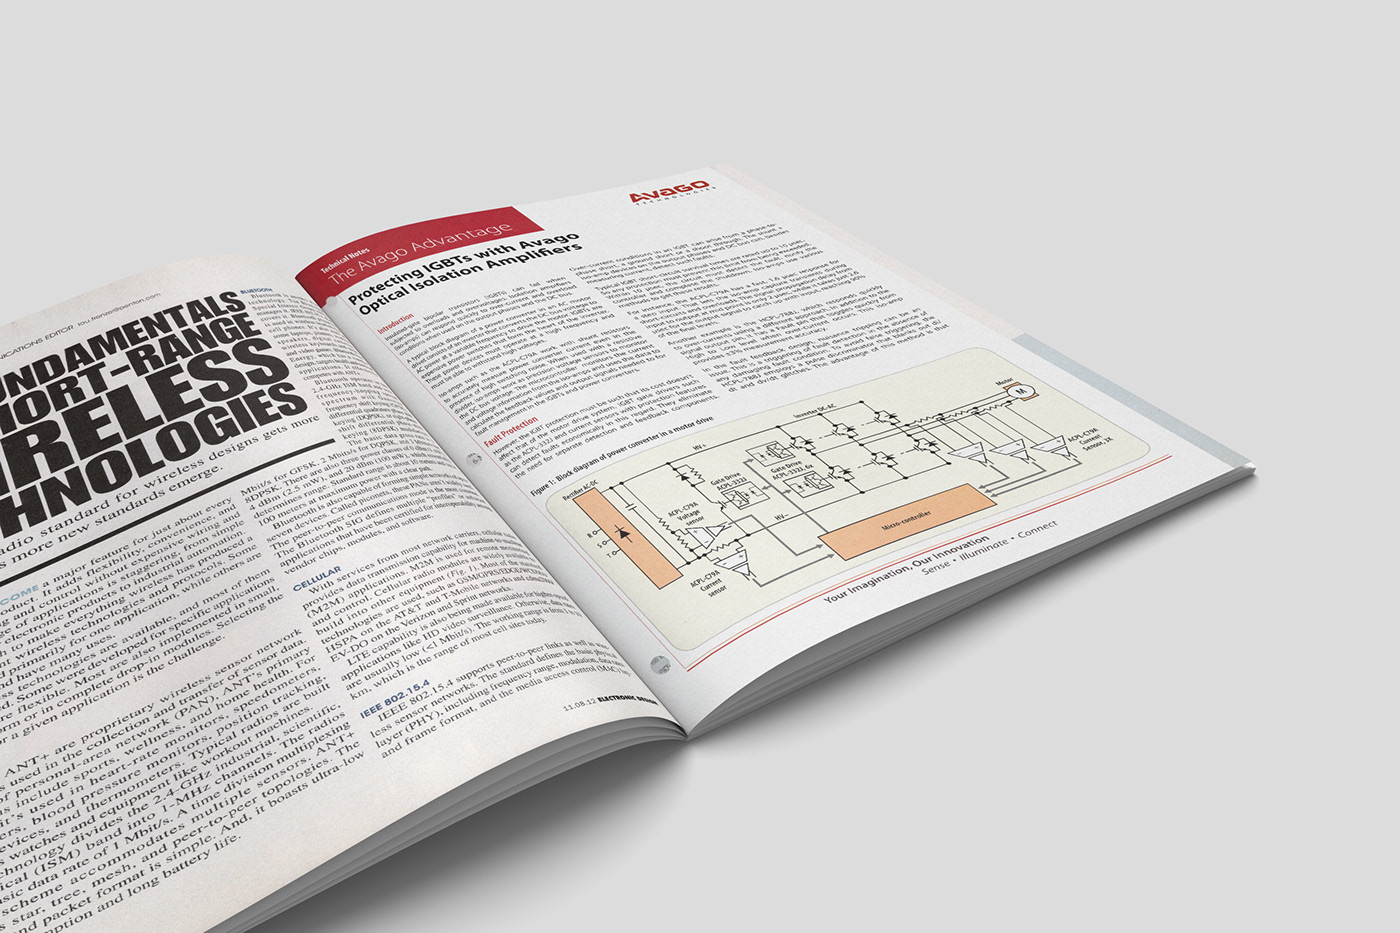 Electronic Design Electronics engineering design engineering magazines magazine Technology editorial design  typography   print production